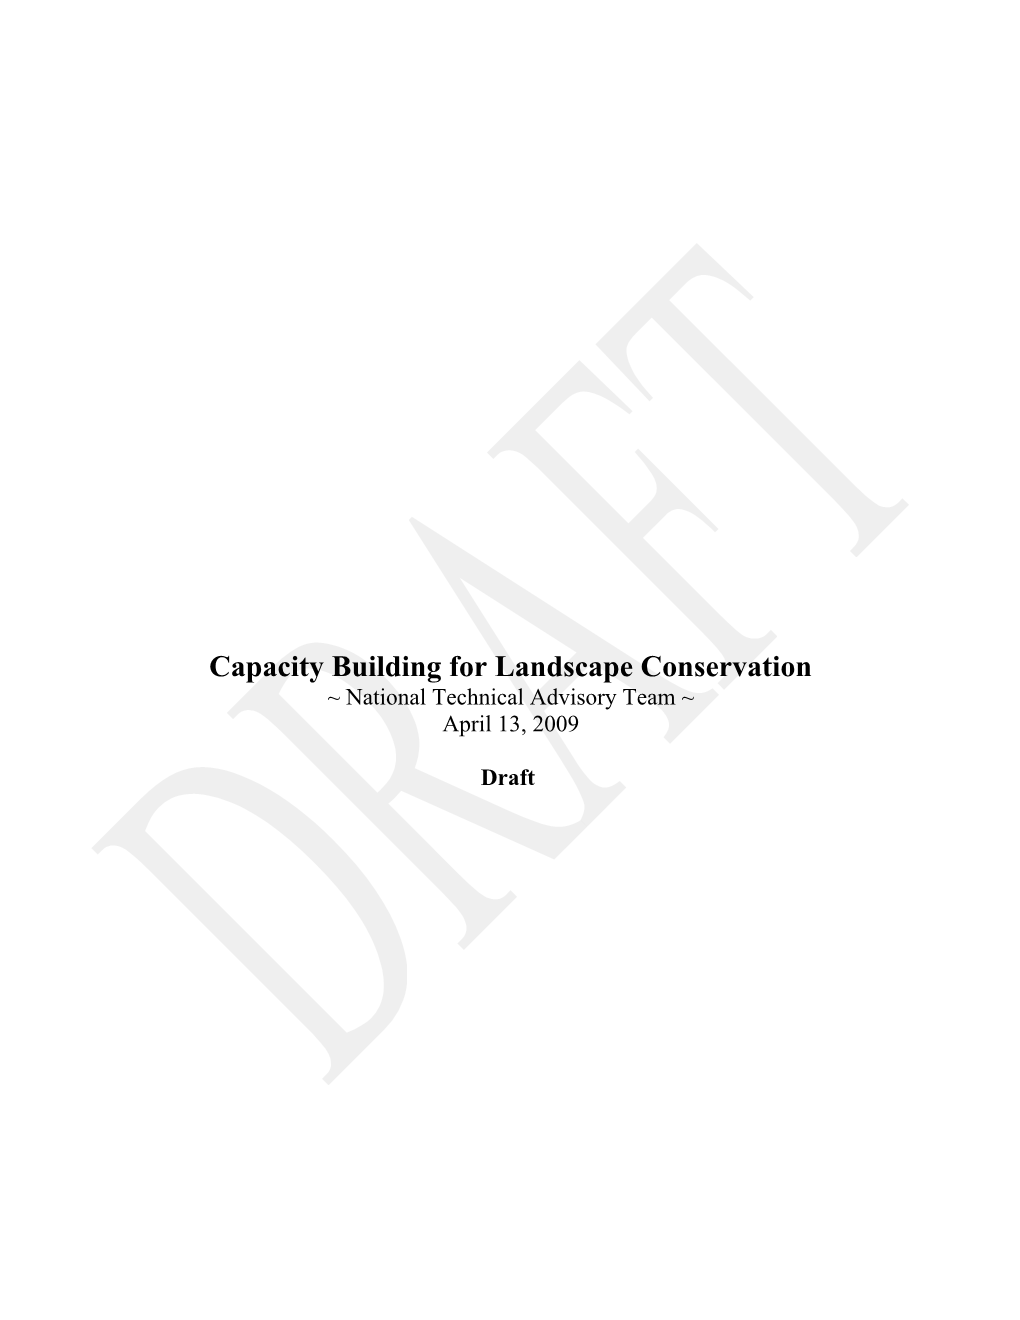 Capacitybuilding for Landscape Conservation